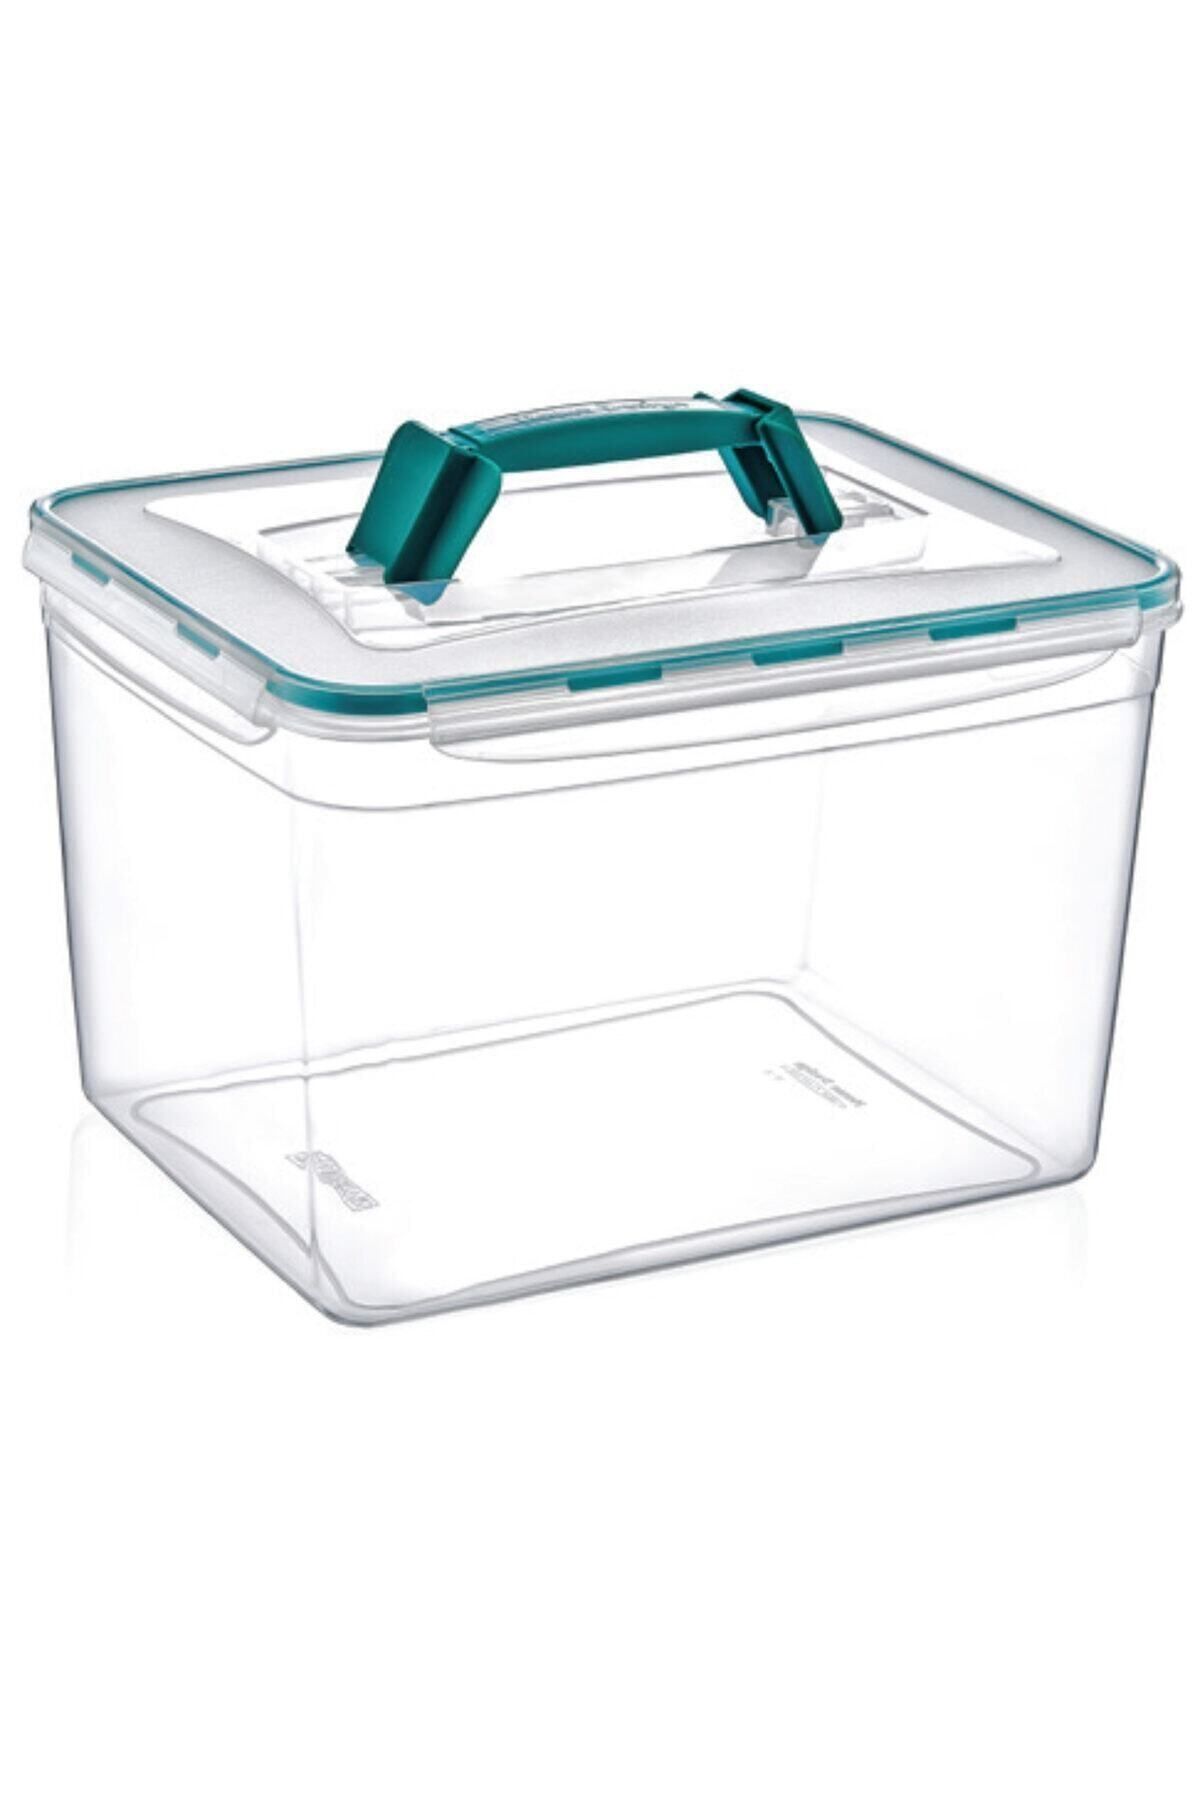 Emofom Fresh Box 11 Litre Hava Geçirmez & Sıvı Sızdırmaz Saklama Kabı Buzdolabı & Kiler Kutusu